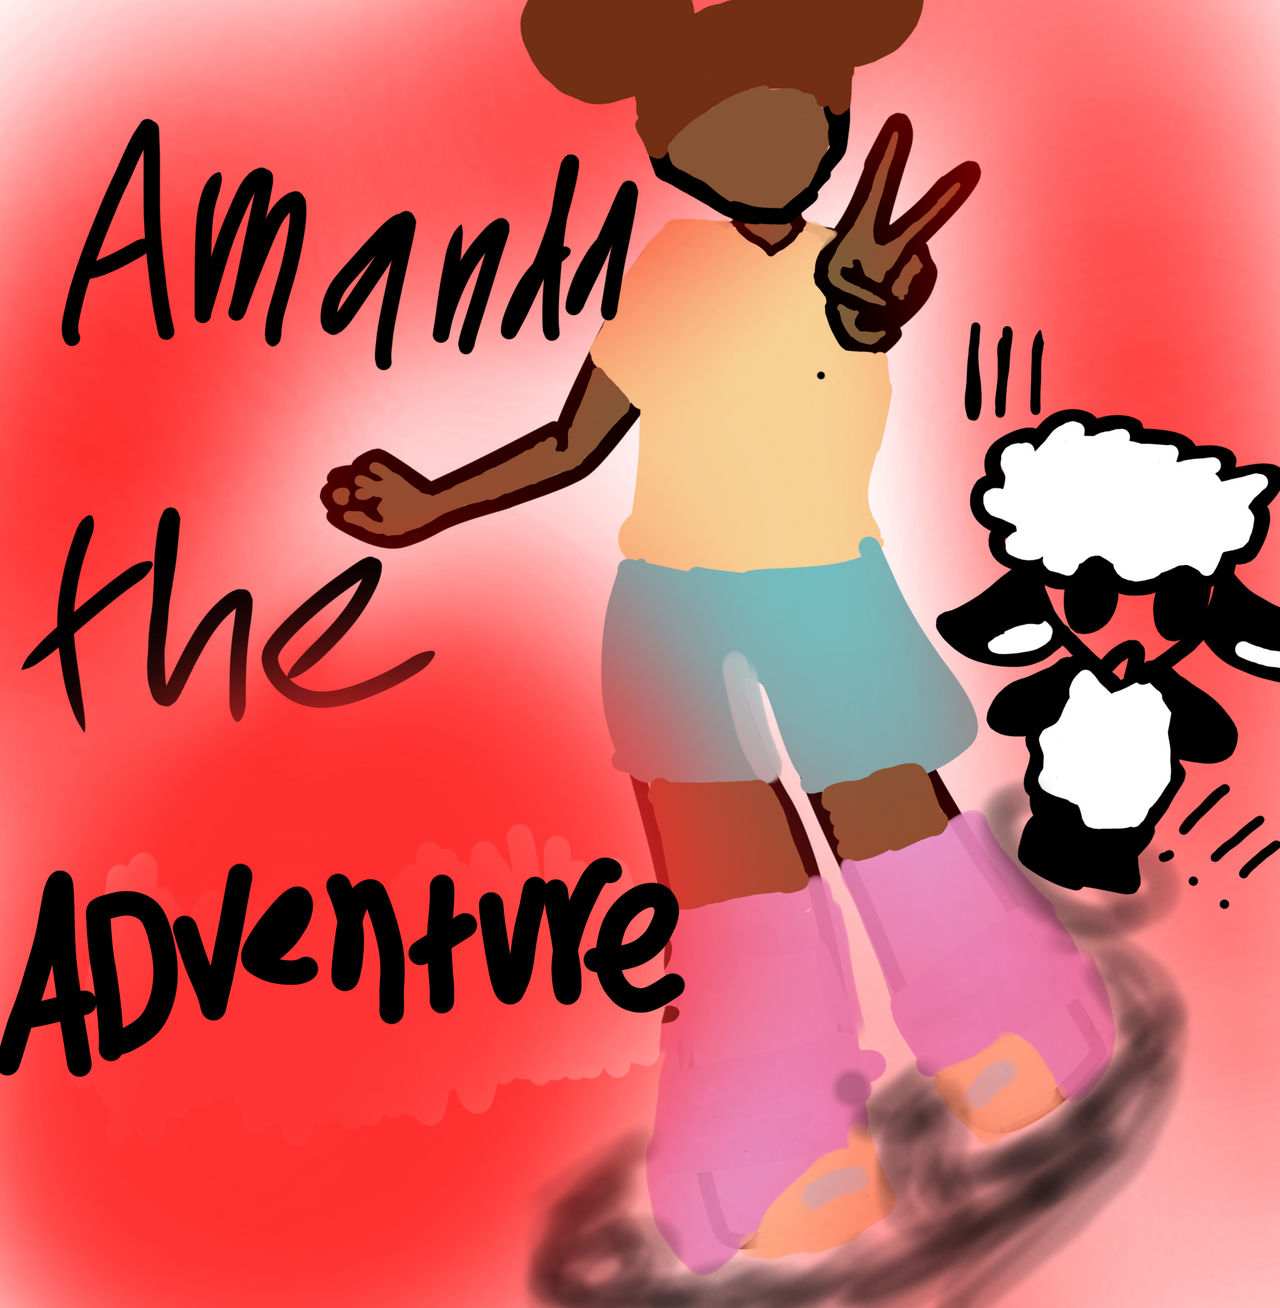 Amanda the Adventurer by ArtisticAmos on DeviantArt